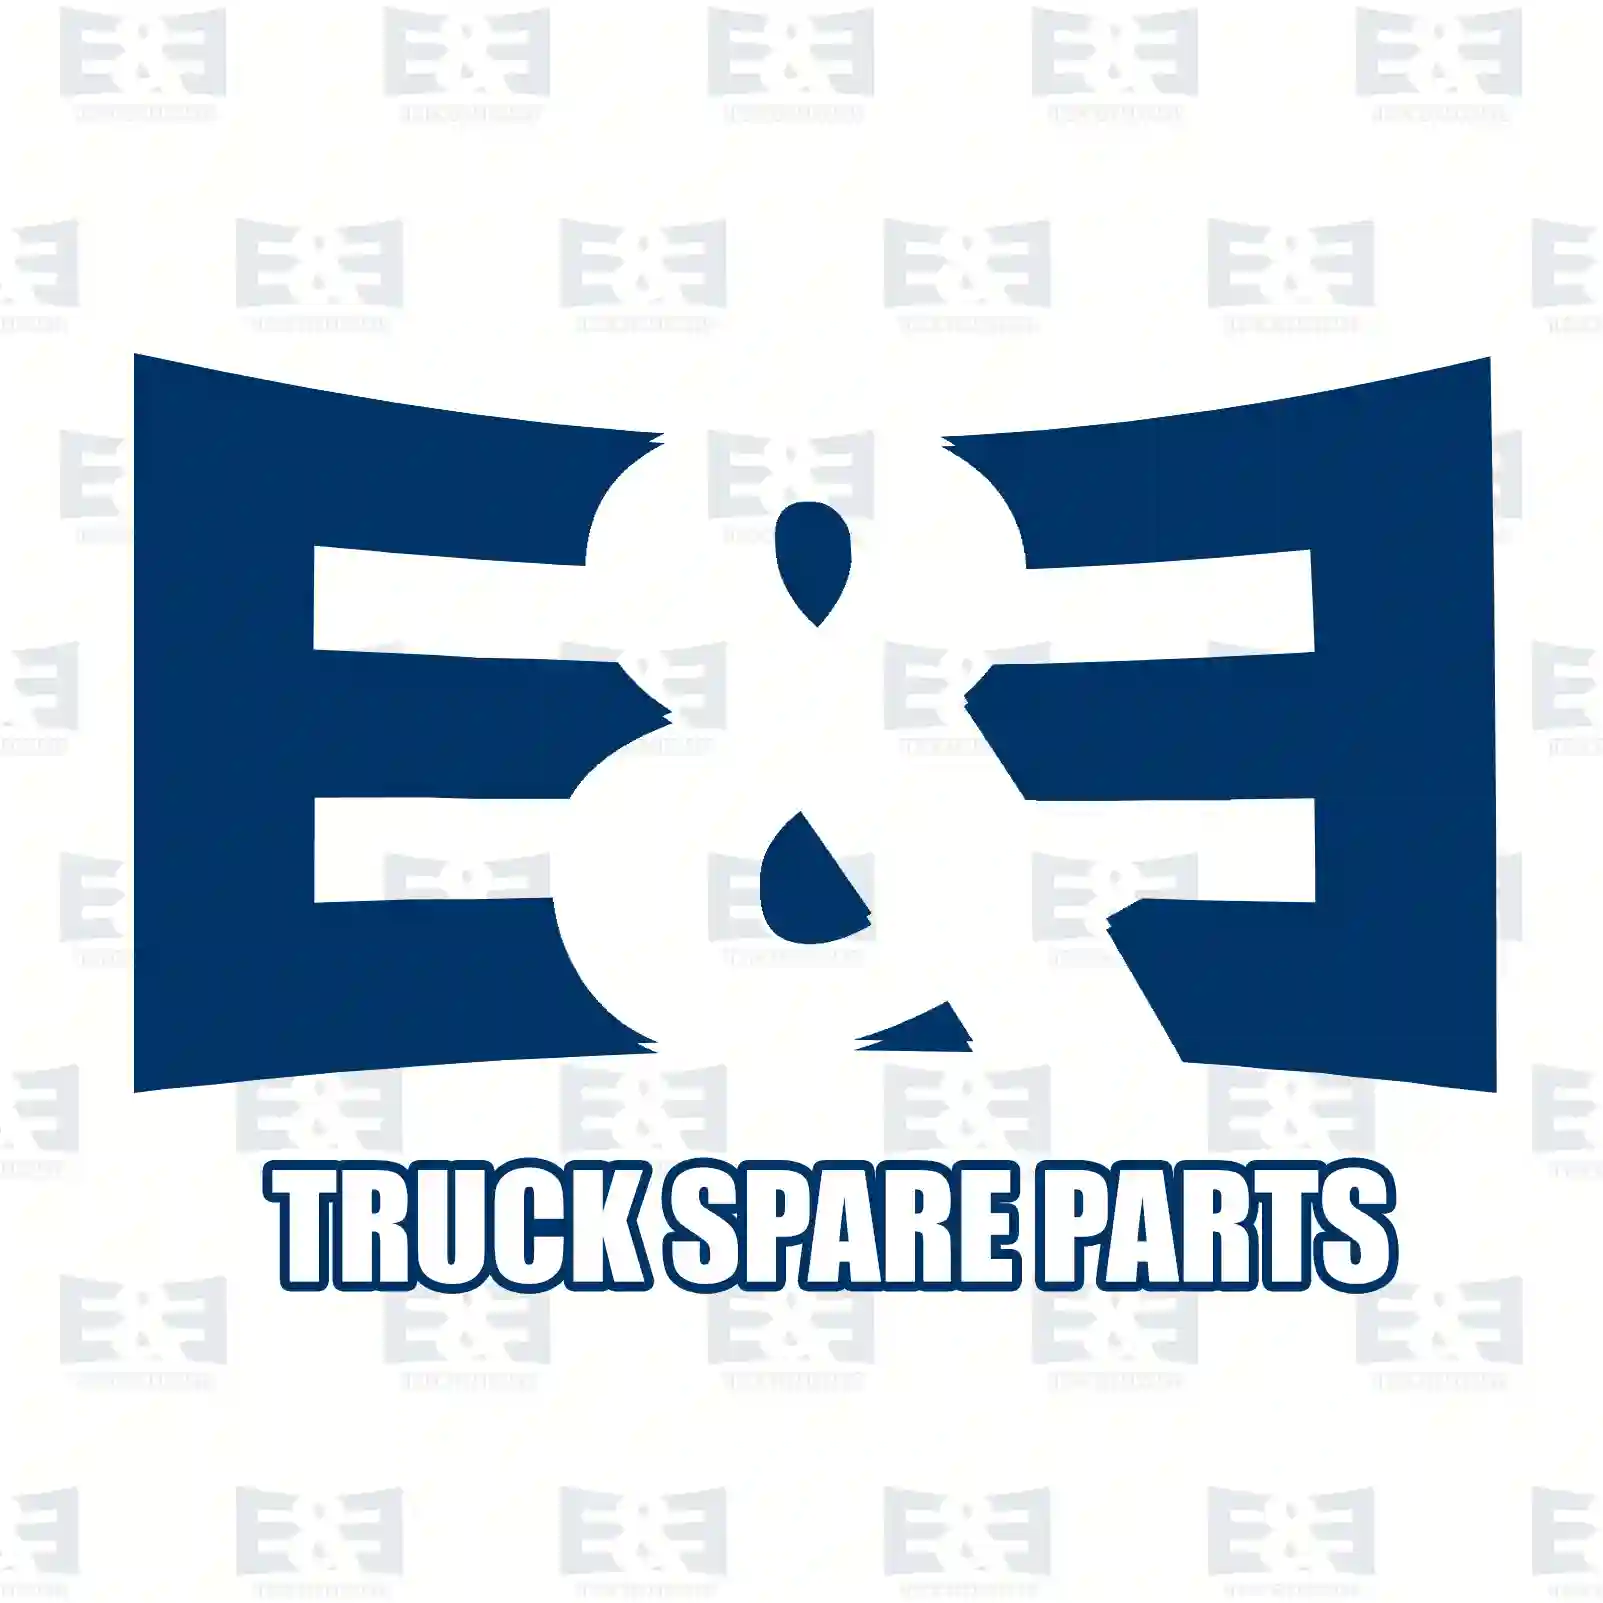  Contact || E&E Truck Spare Parts | Truck Spare Parts, Auotomotive Spare Parts